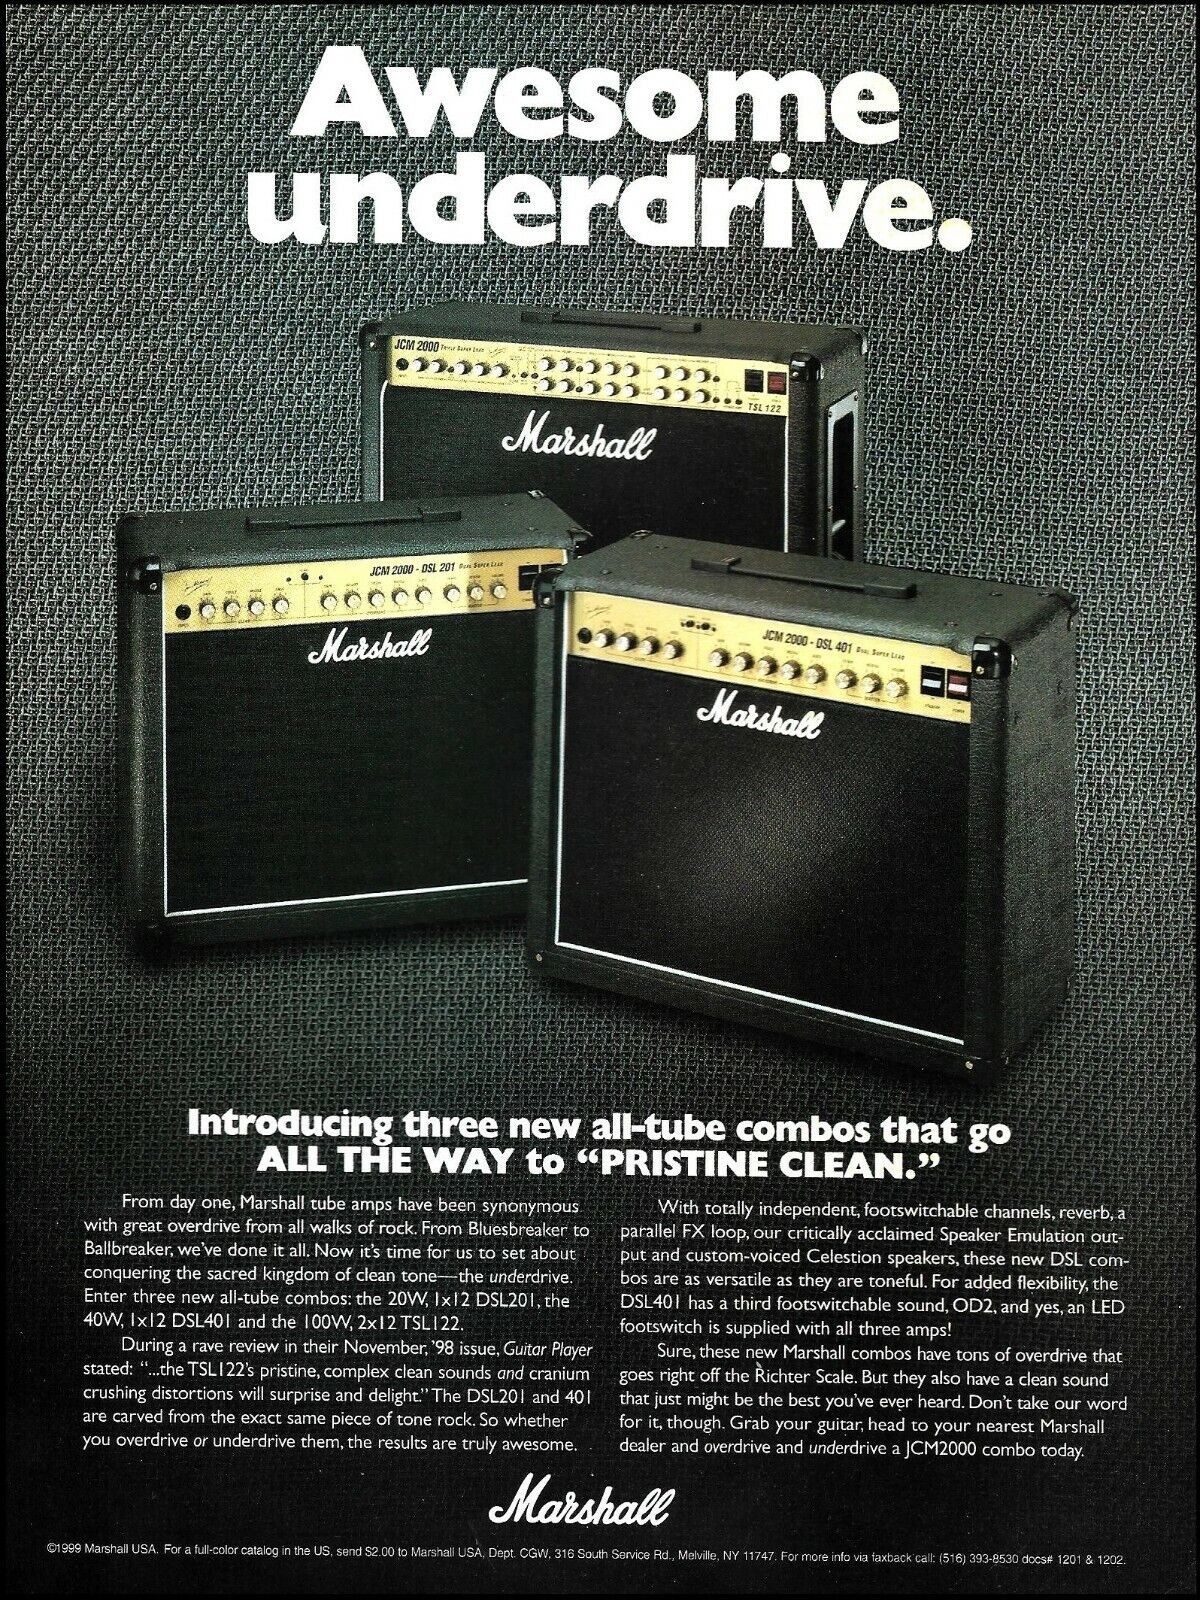 Jim Marshall DSL 201 401 TSl 122 guitar amp ad 1999 amplifier advertisement